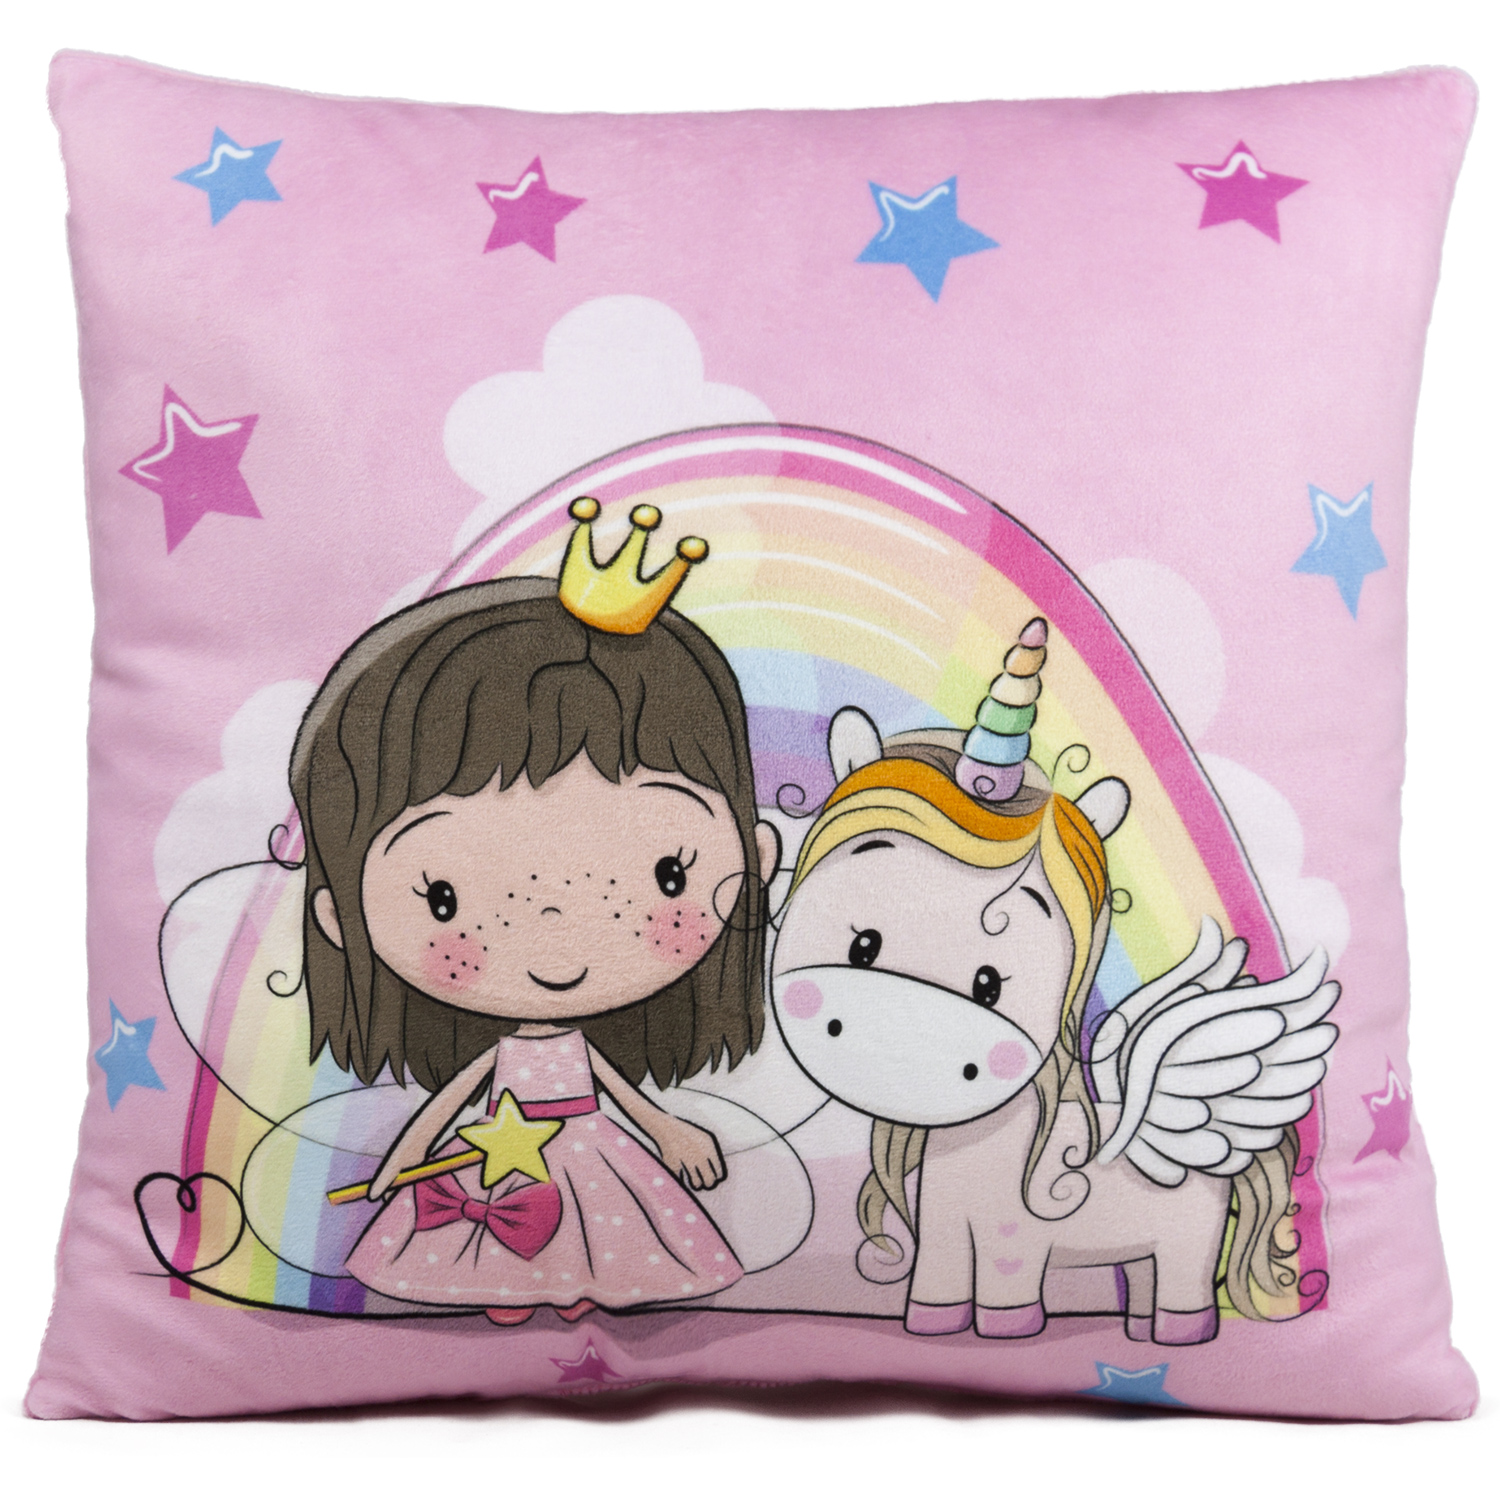 Pillow with princess and unicorn